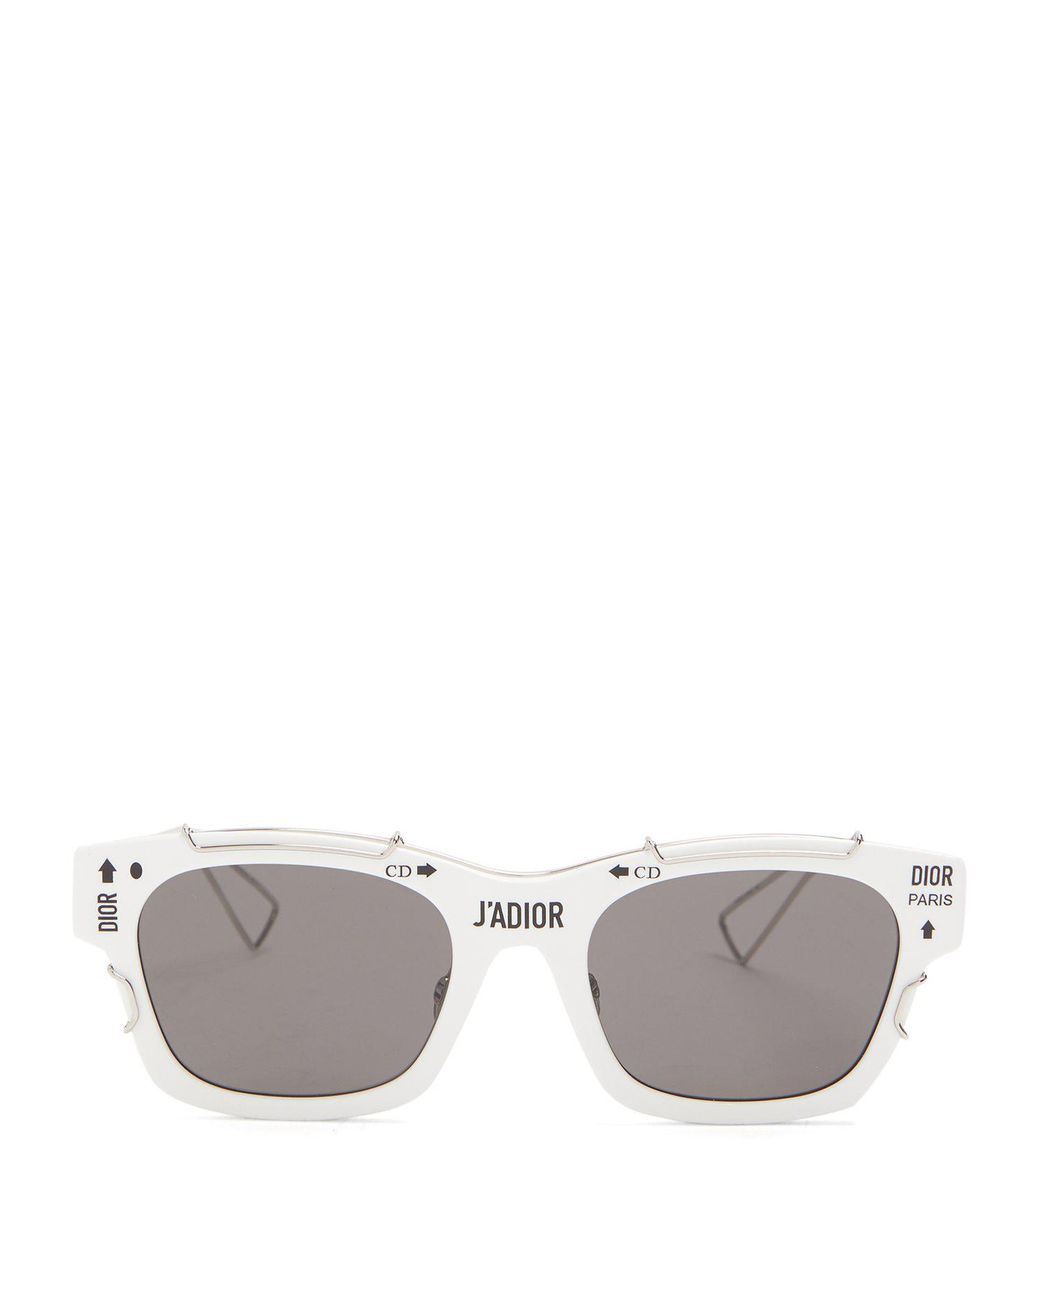 Dior J'adior Logo Printed Acetate Sunglasses in White | Lyst